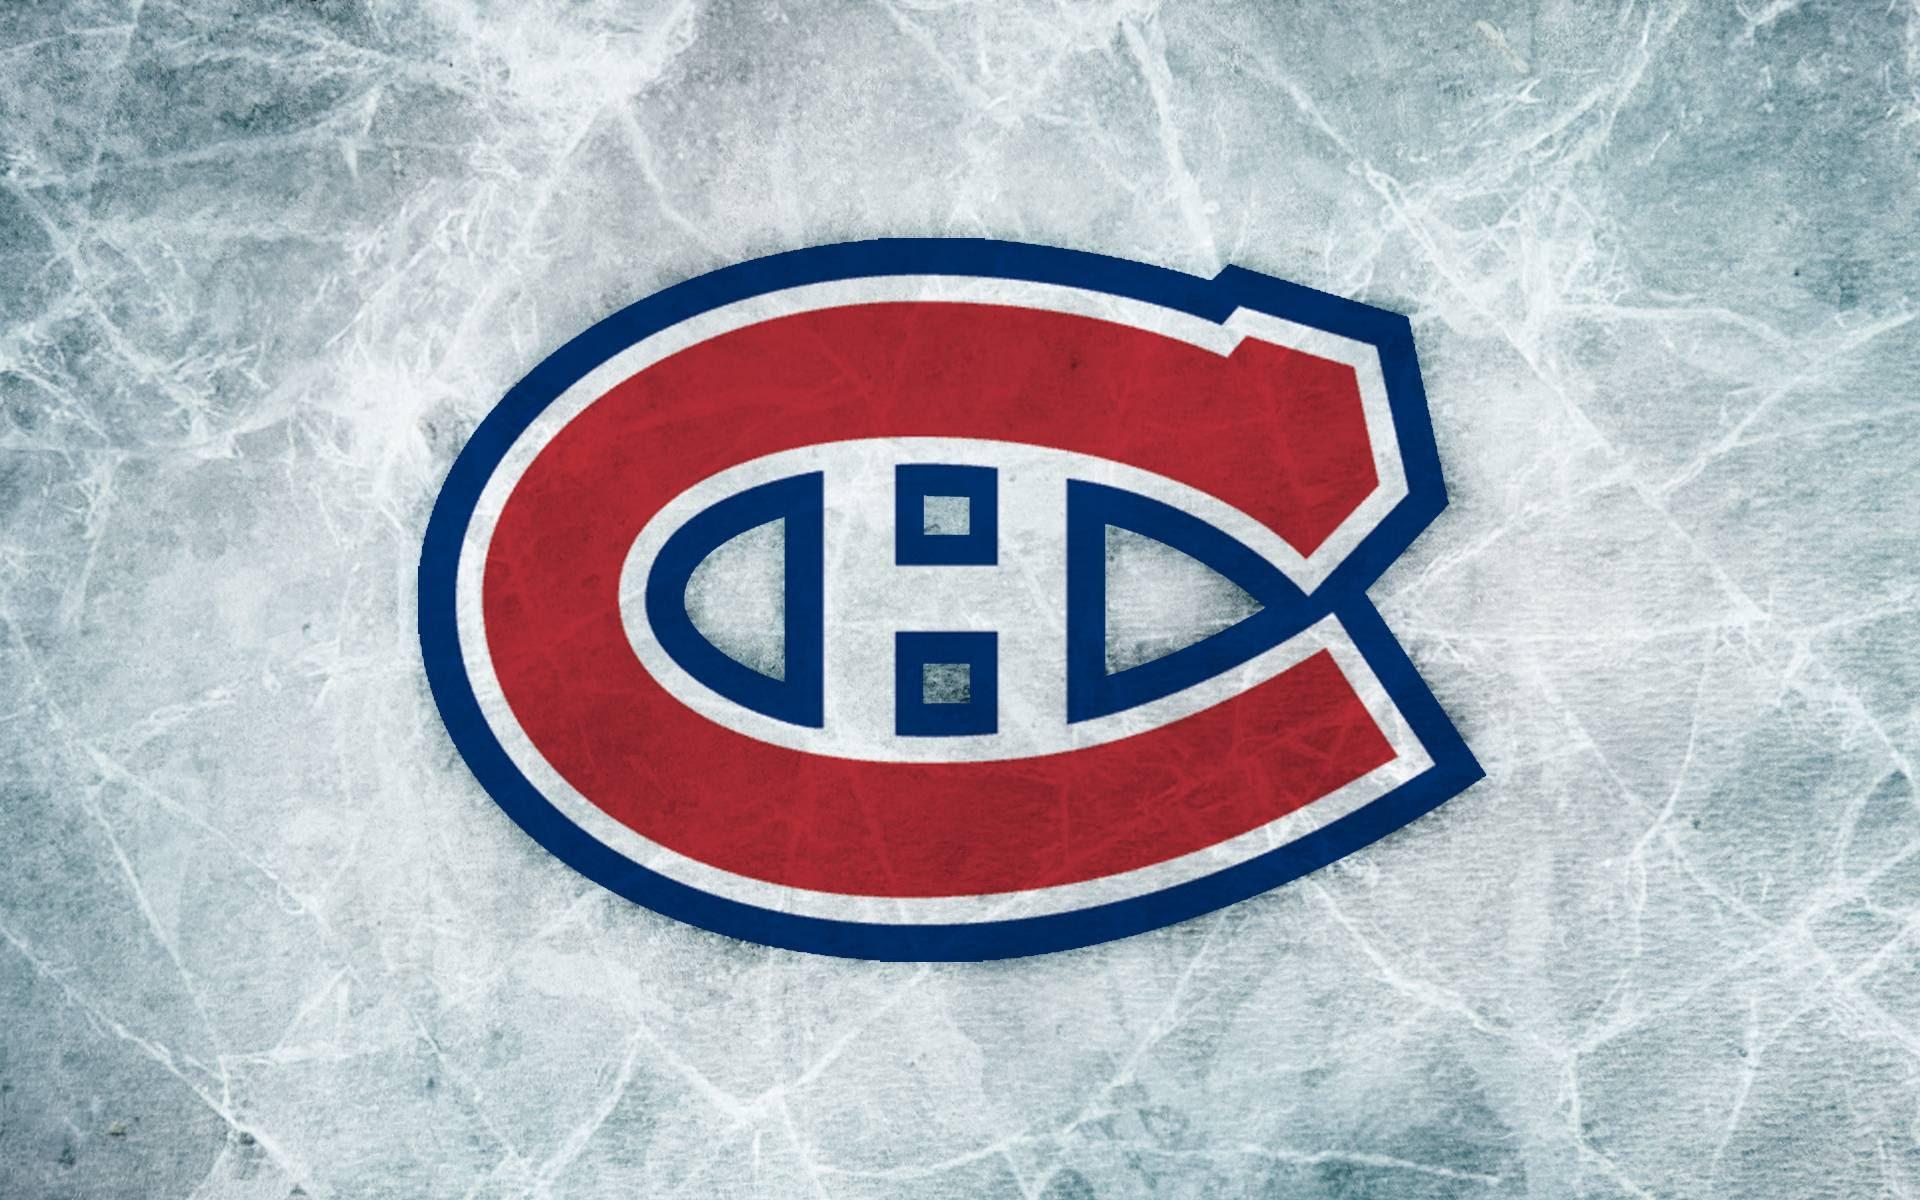 Montreal Canadiens. Season 2016 2017